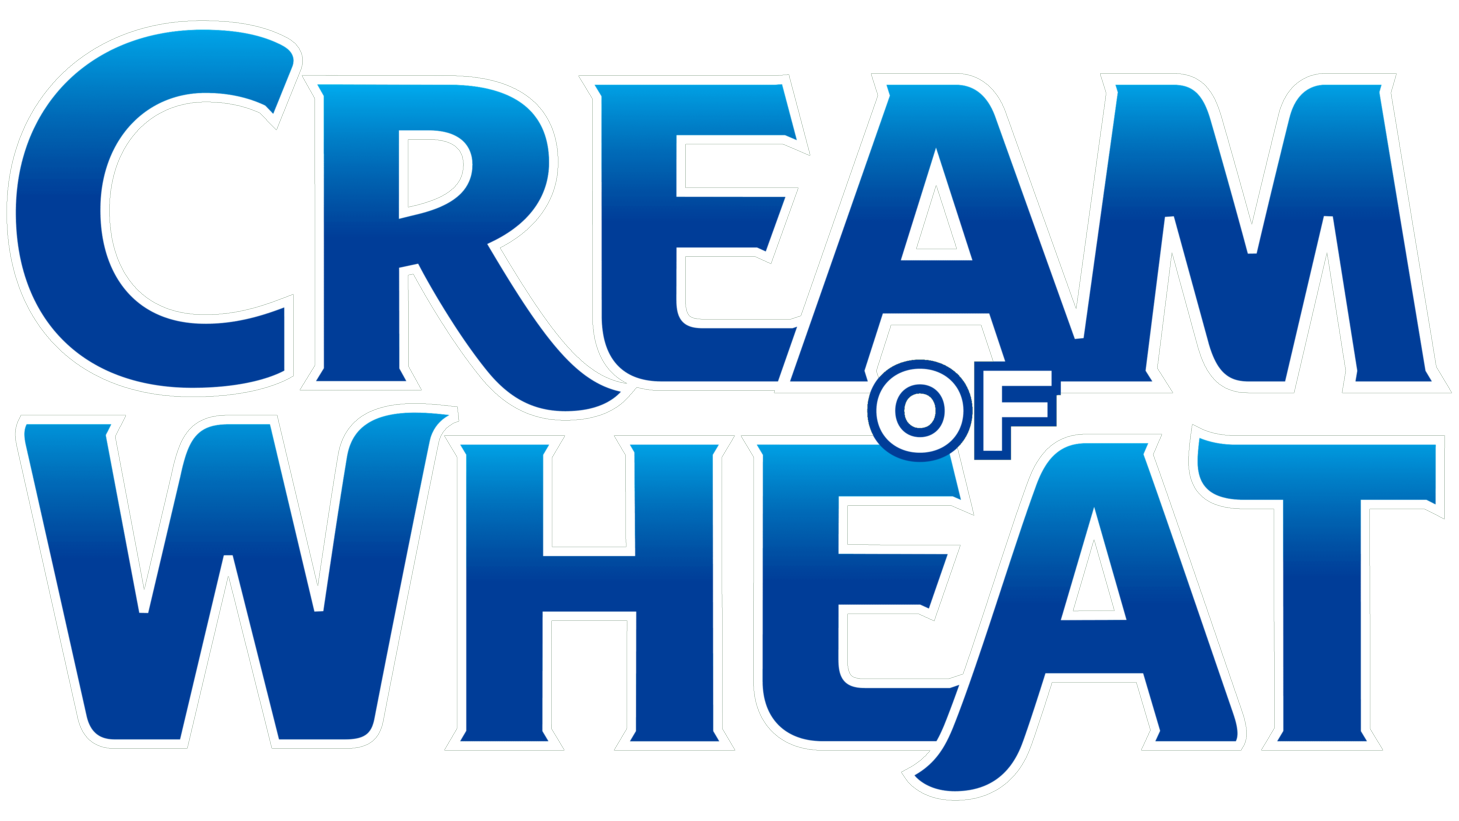 Cream of wheat sign